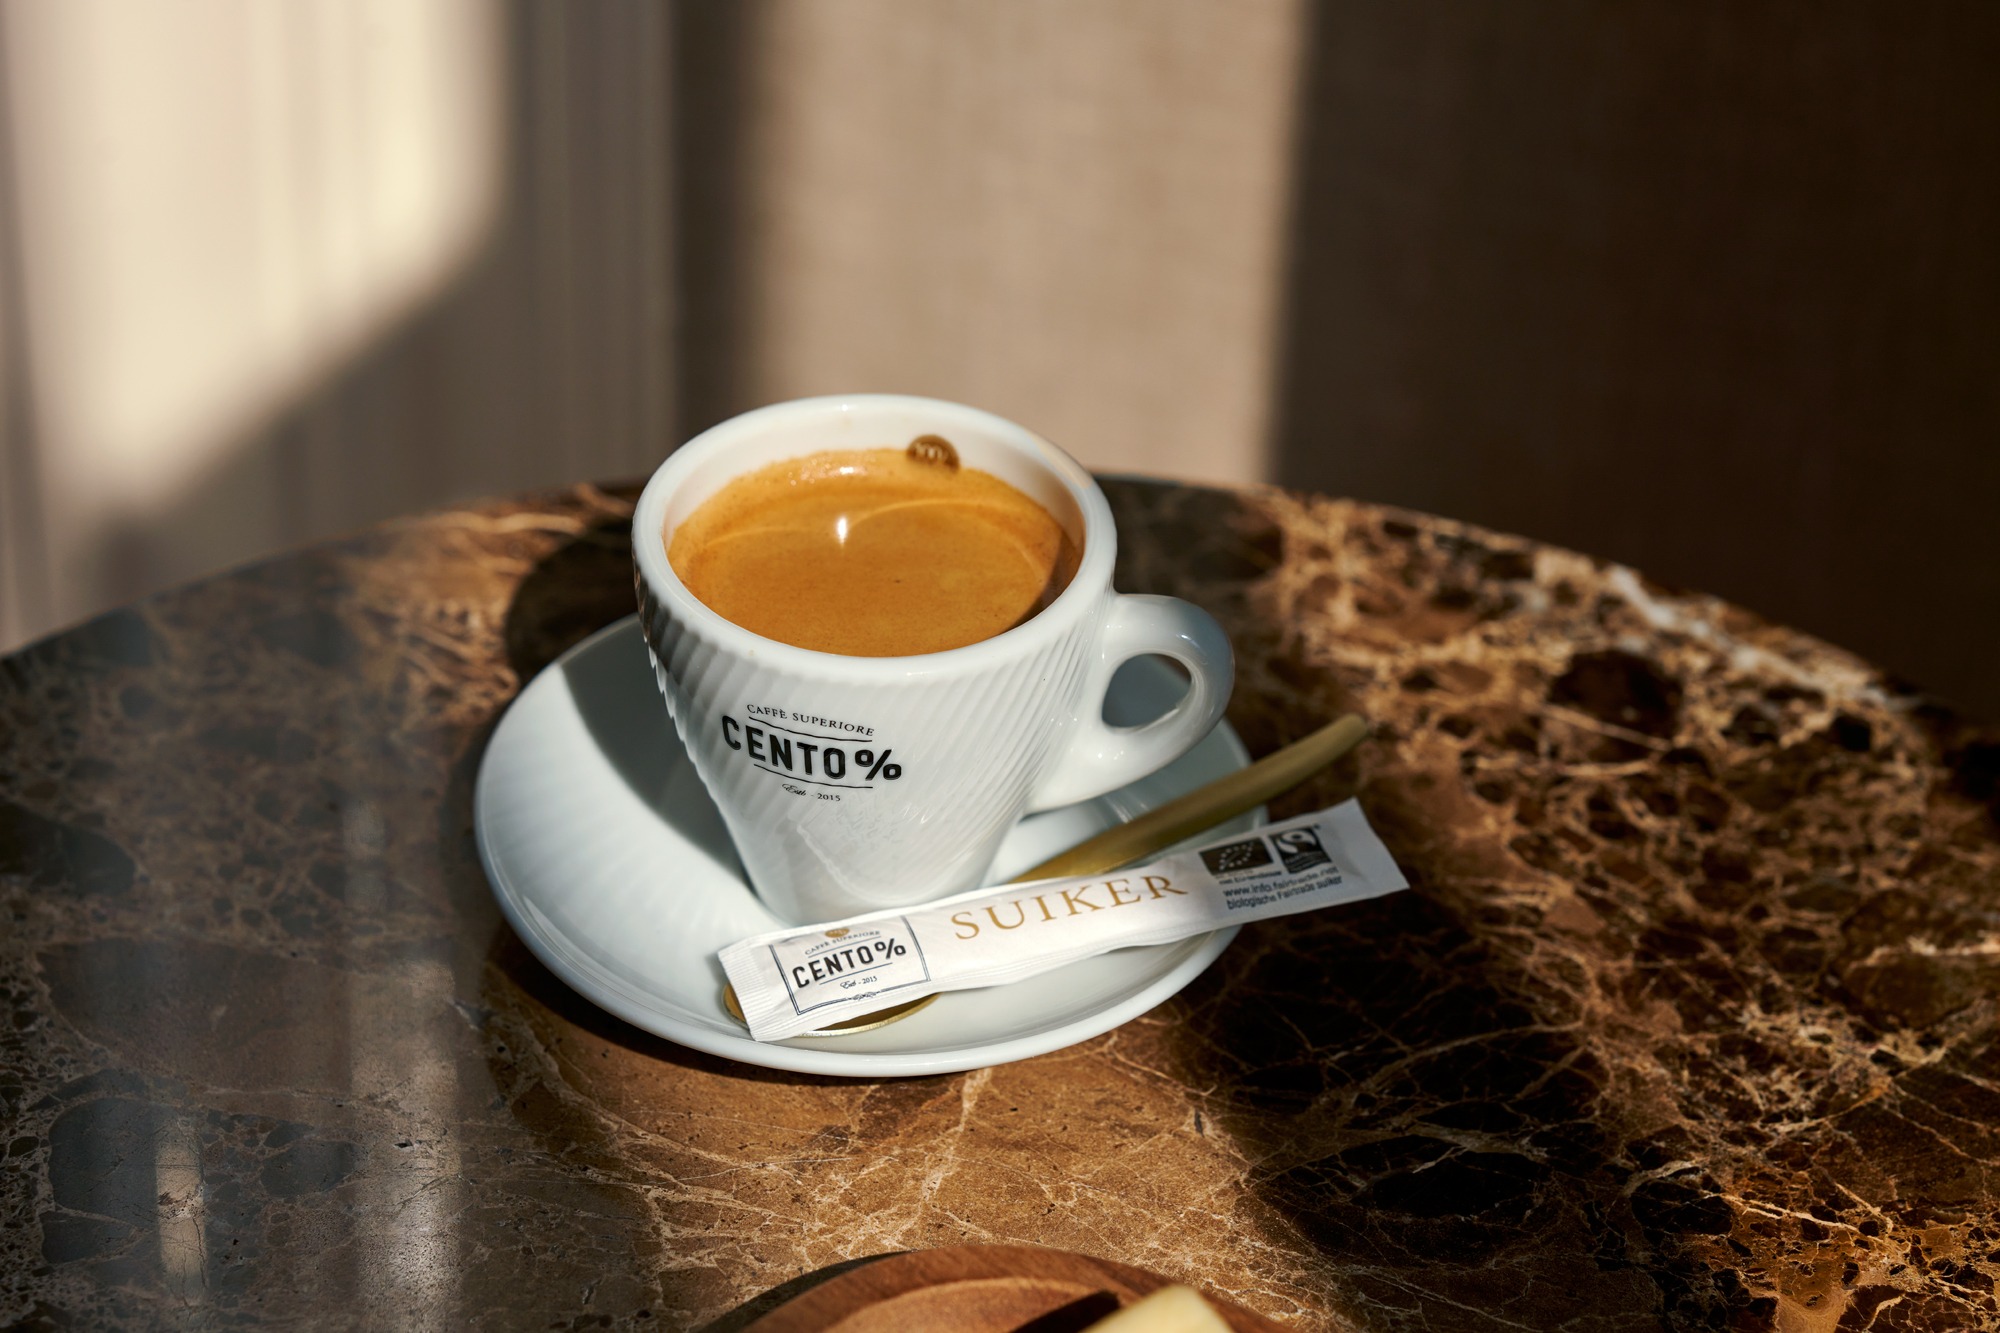 Cento% Nero espressobonen | KoffiePartners